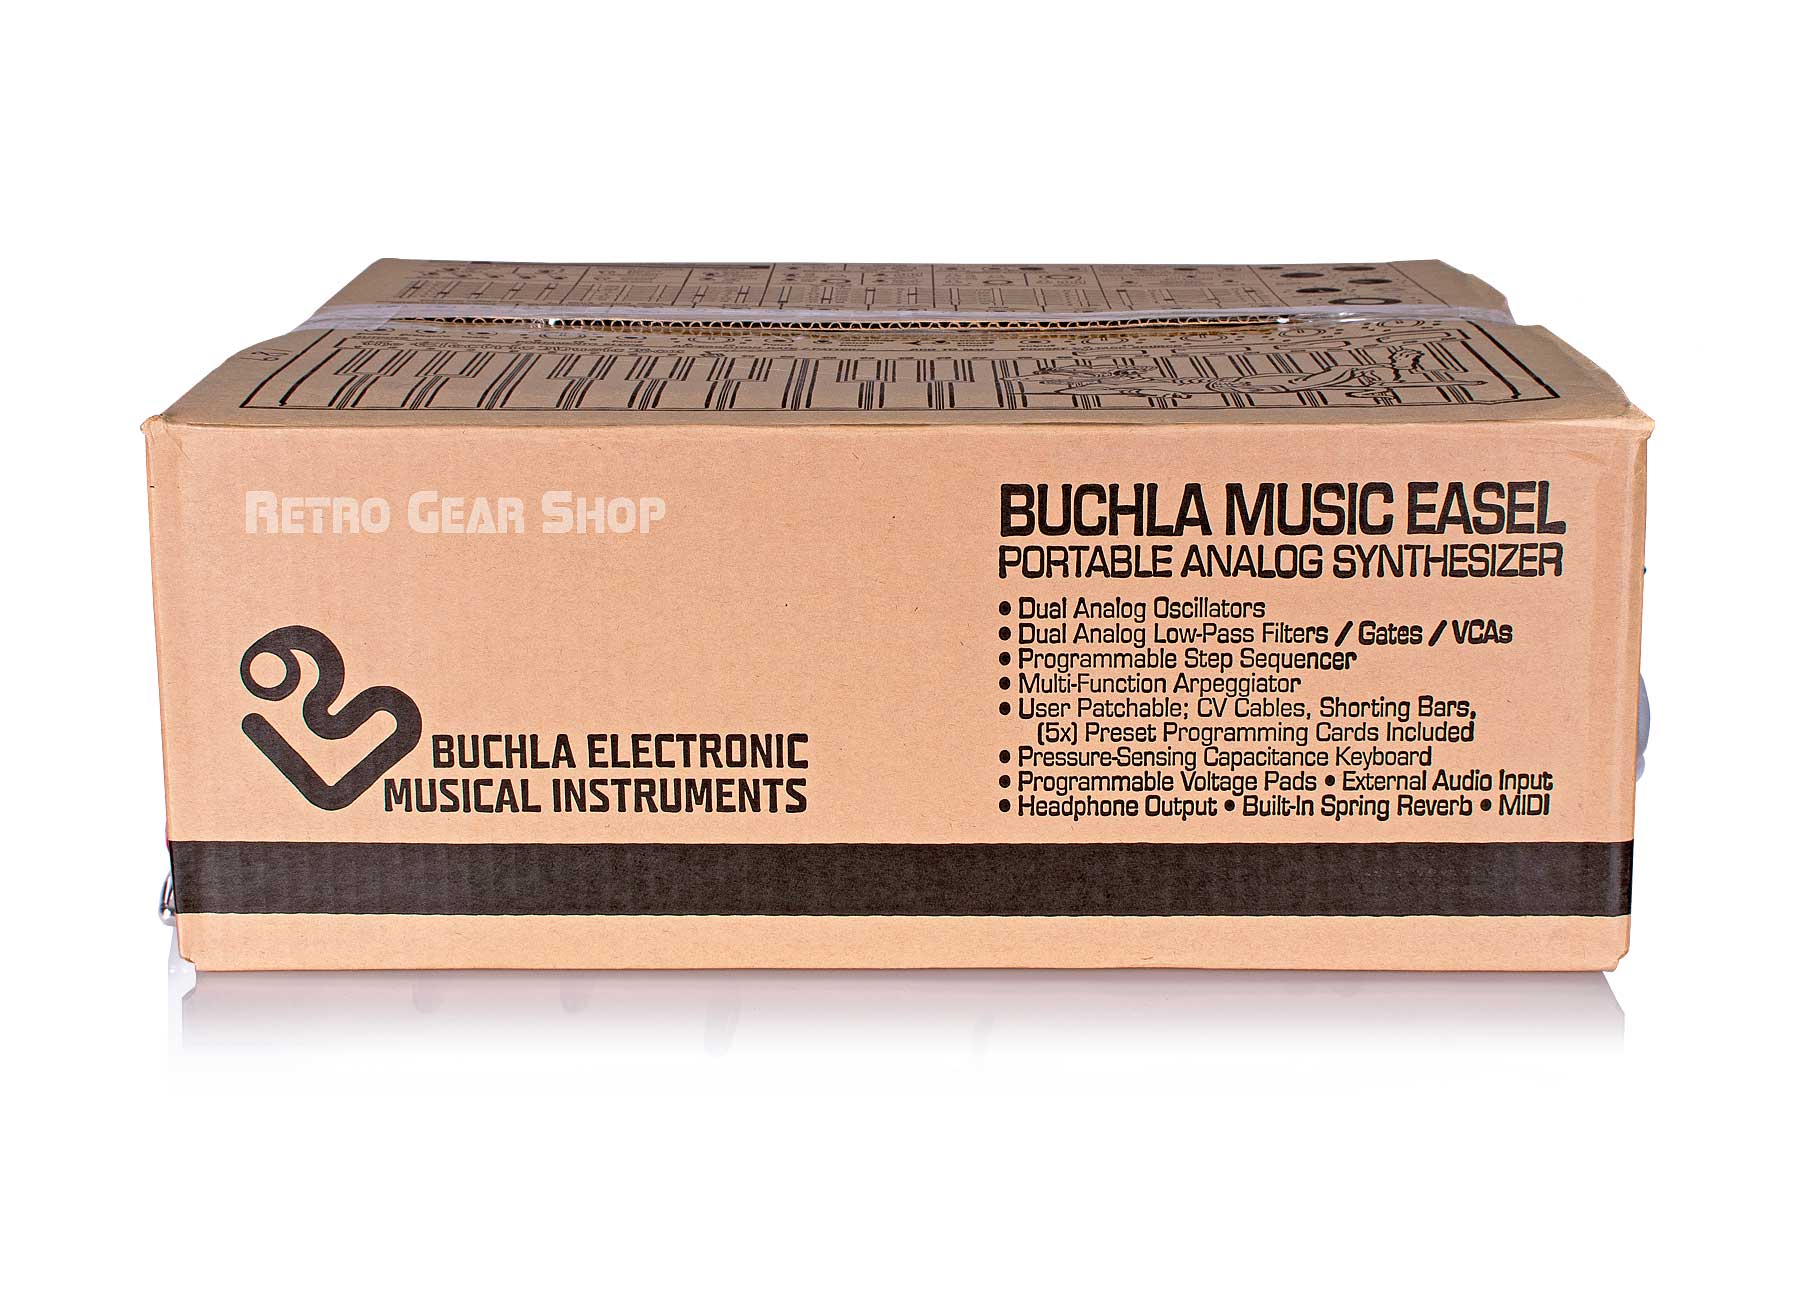 Buchla Music Easel Original Box